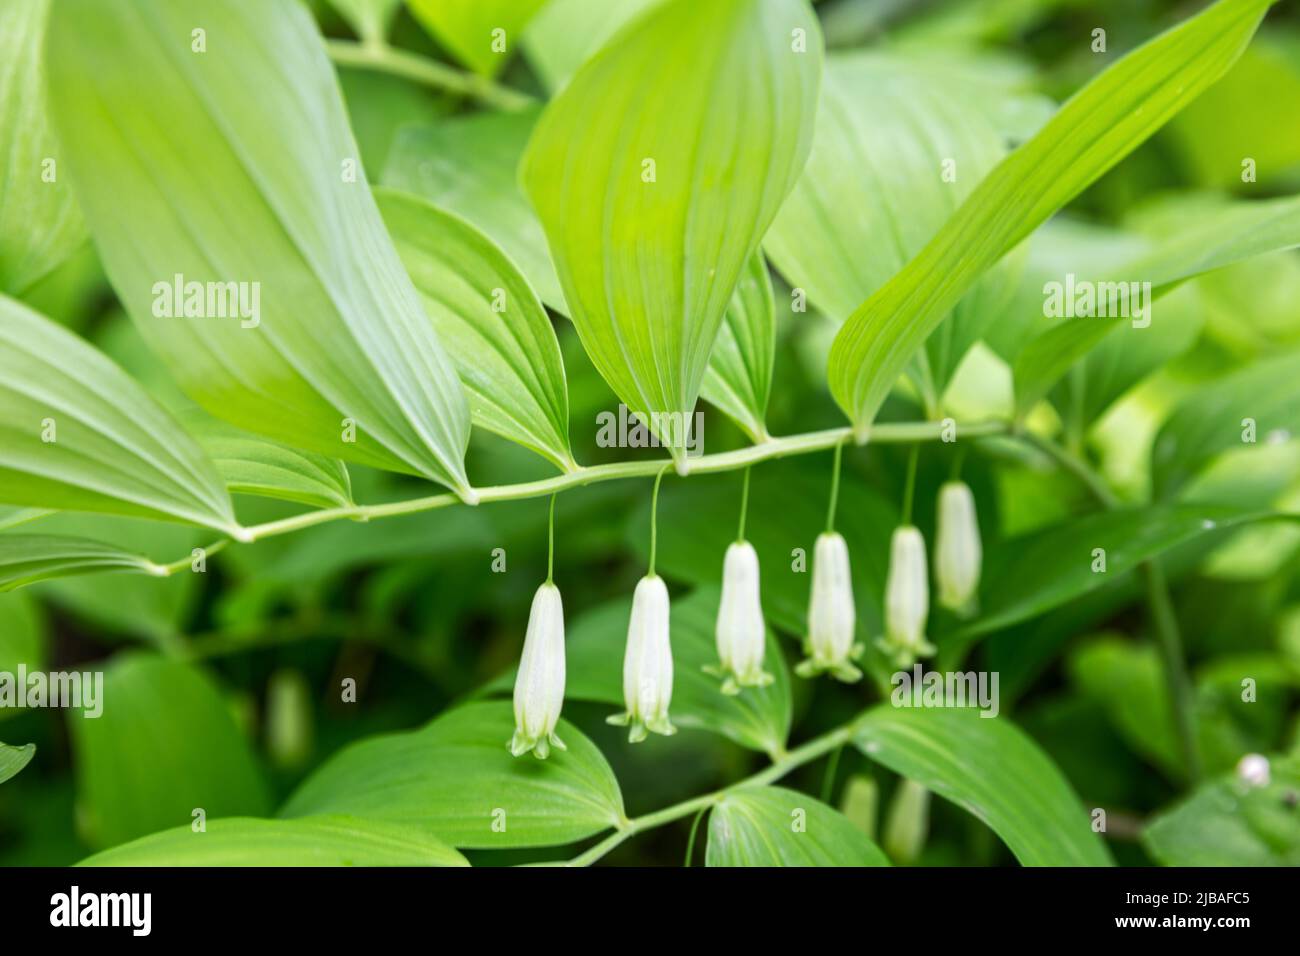 Flores de planta medicinal silvestre Polygonatum odoratum o sello de Salomón Foto de stock